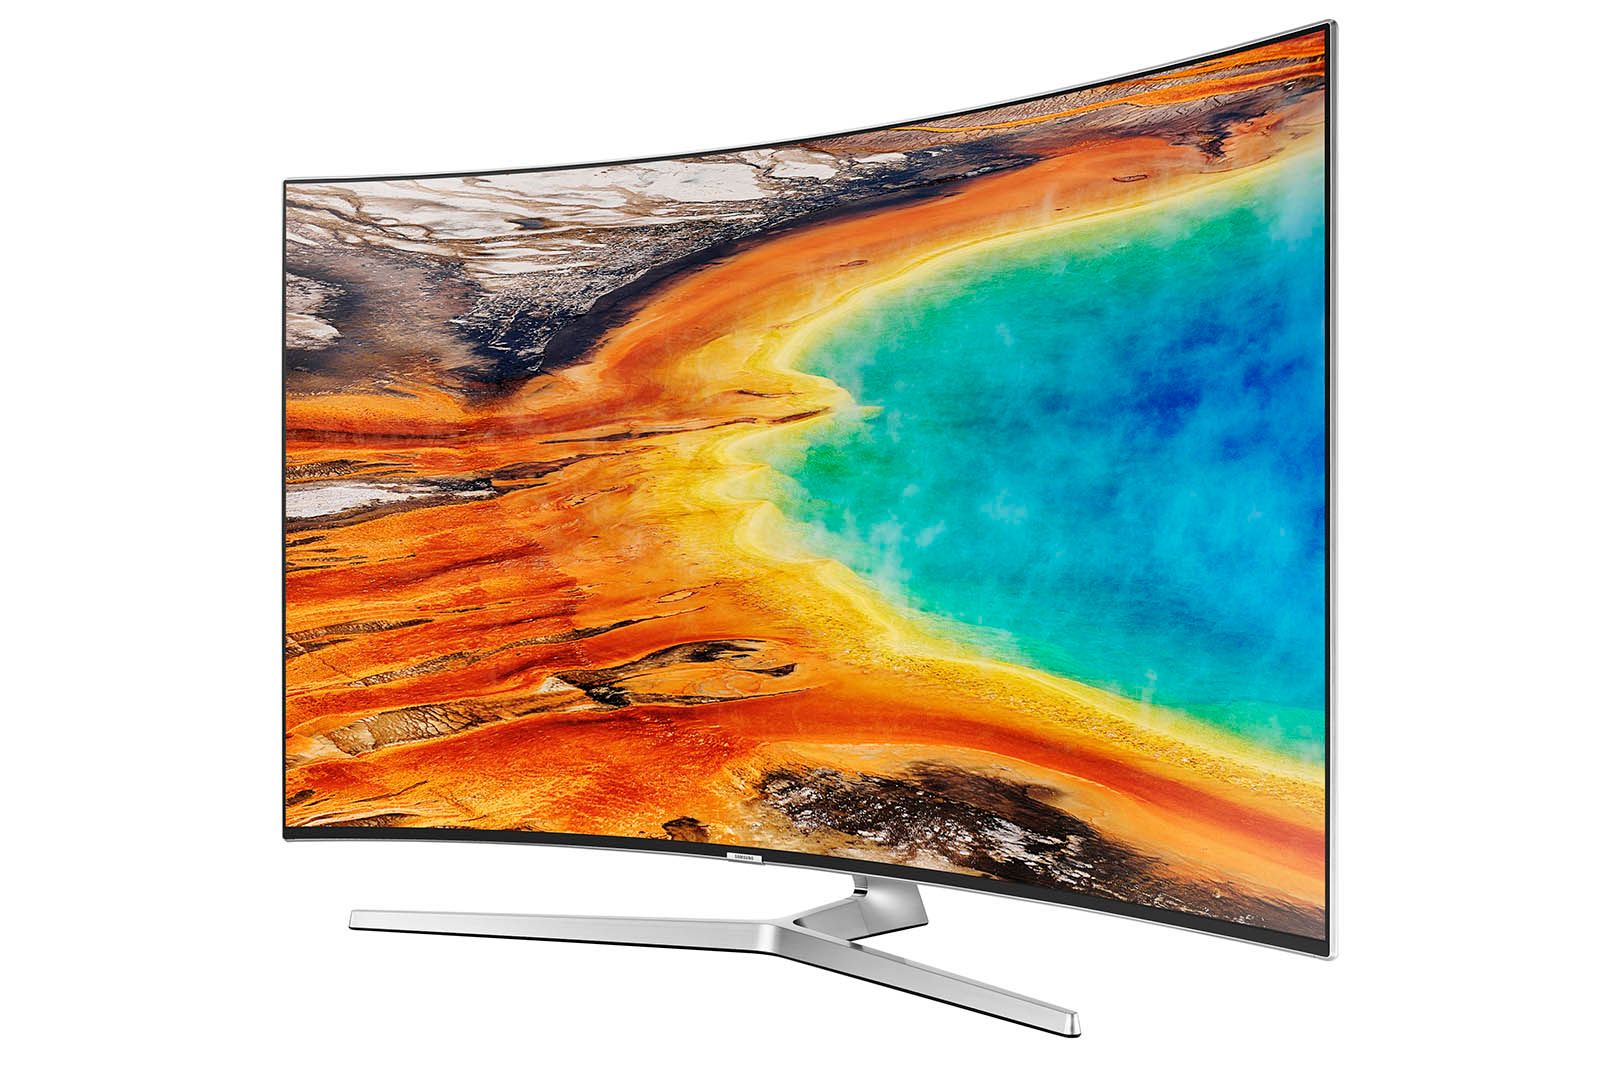 Samsung MU9000 TV review image 1